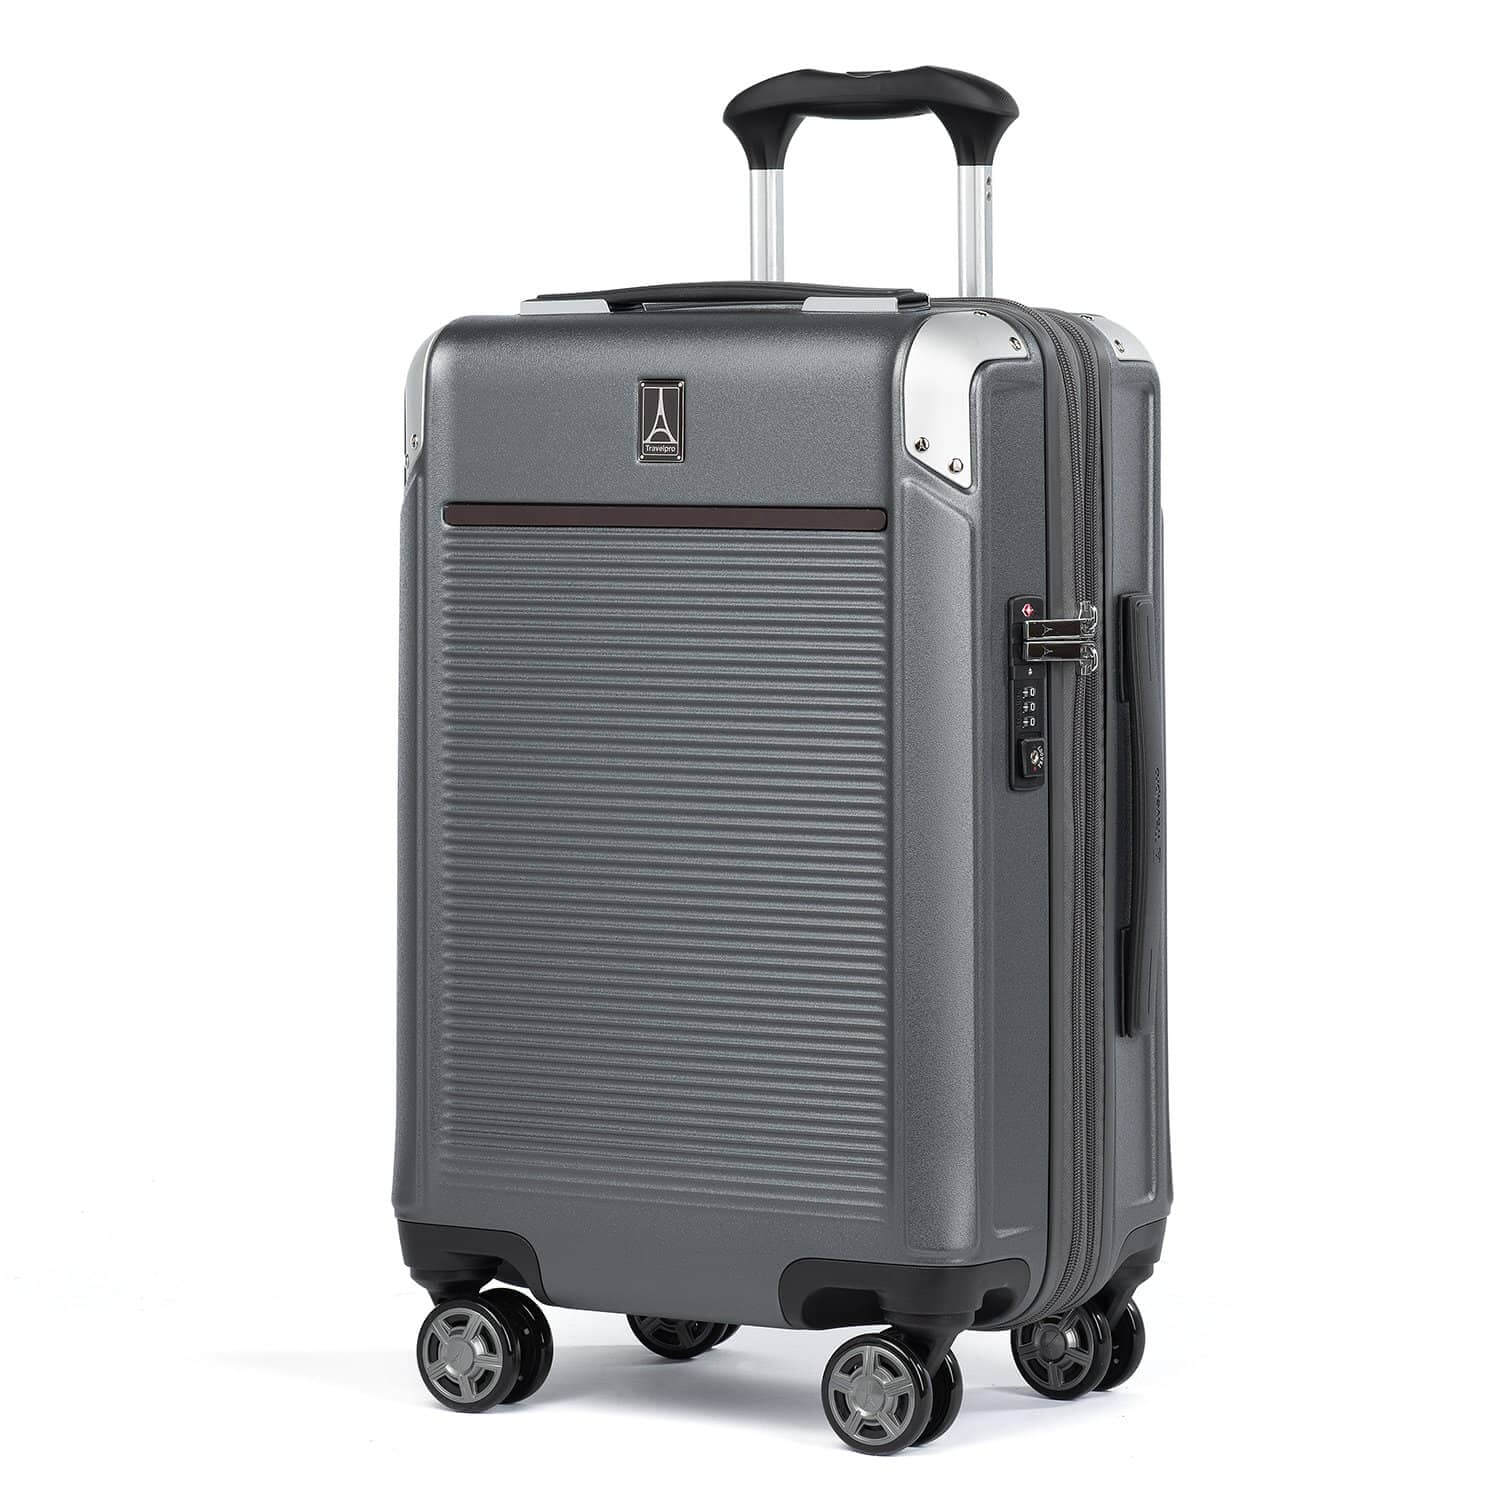 TravelPro Platinum Elite carry-on luggage